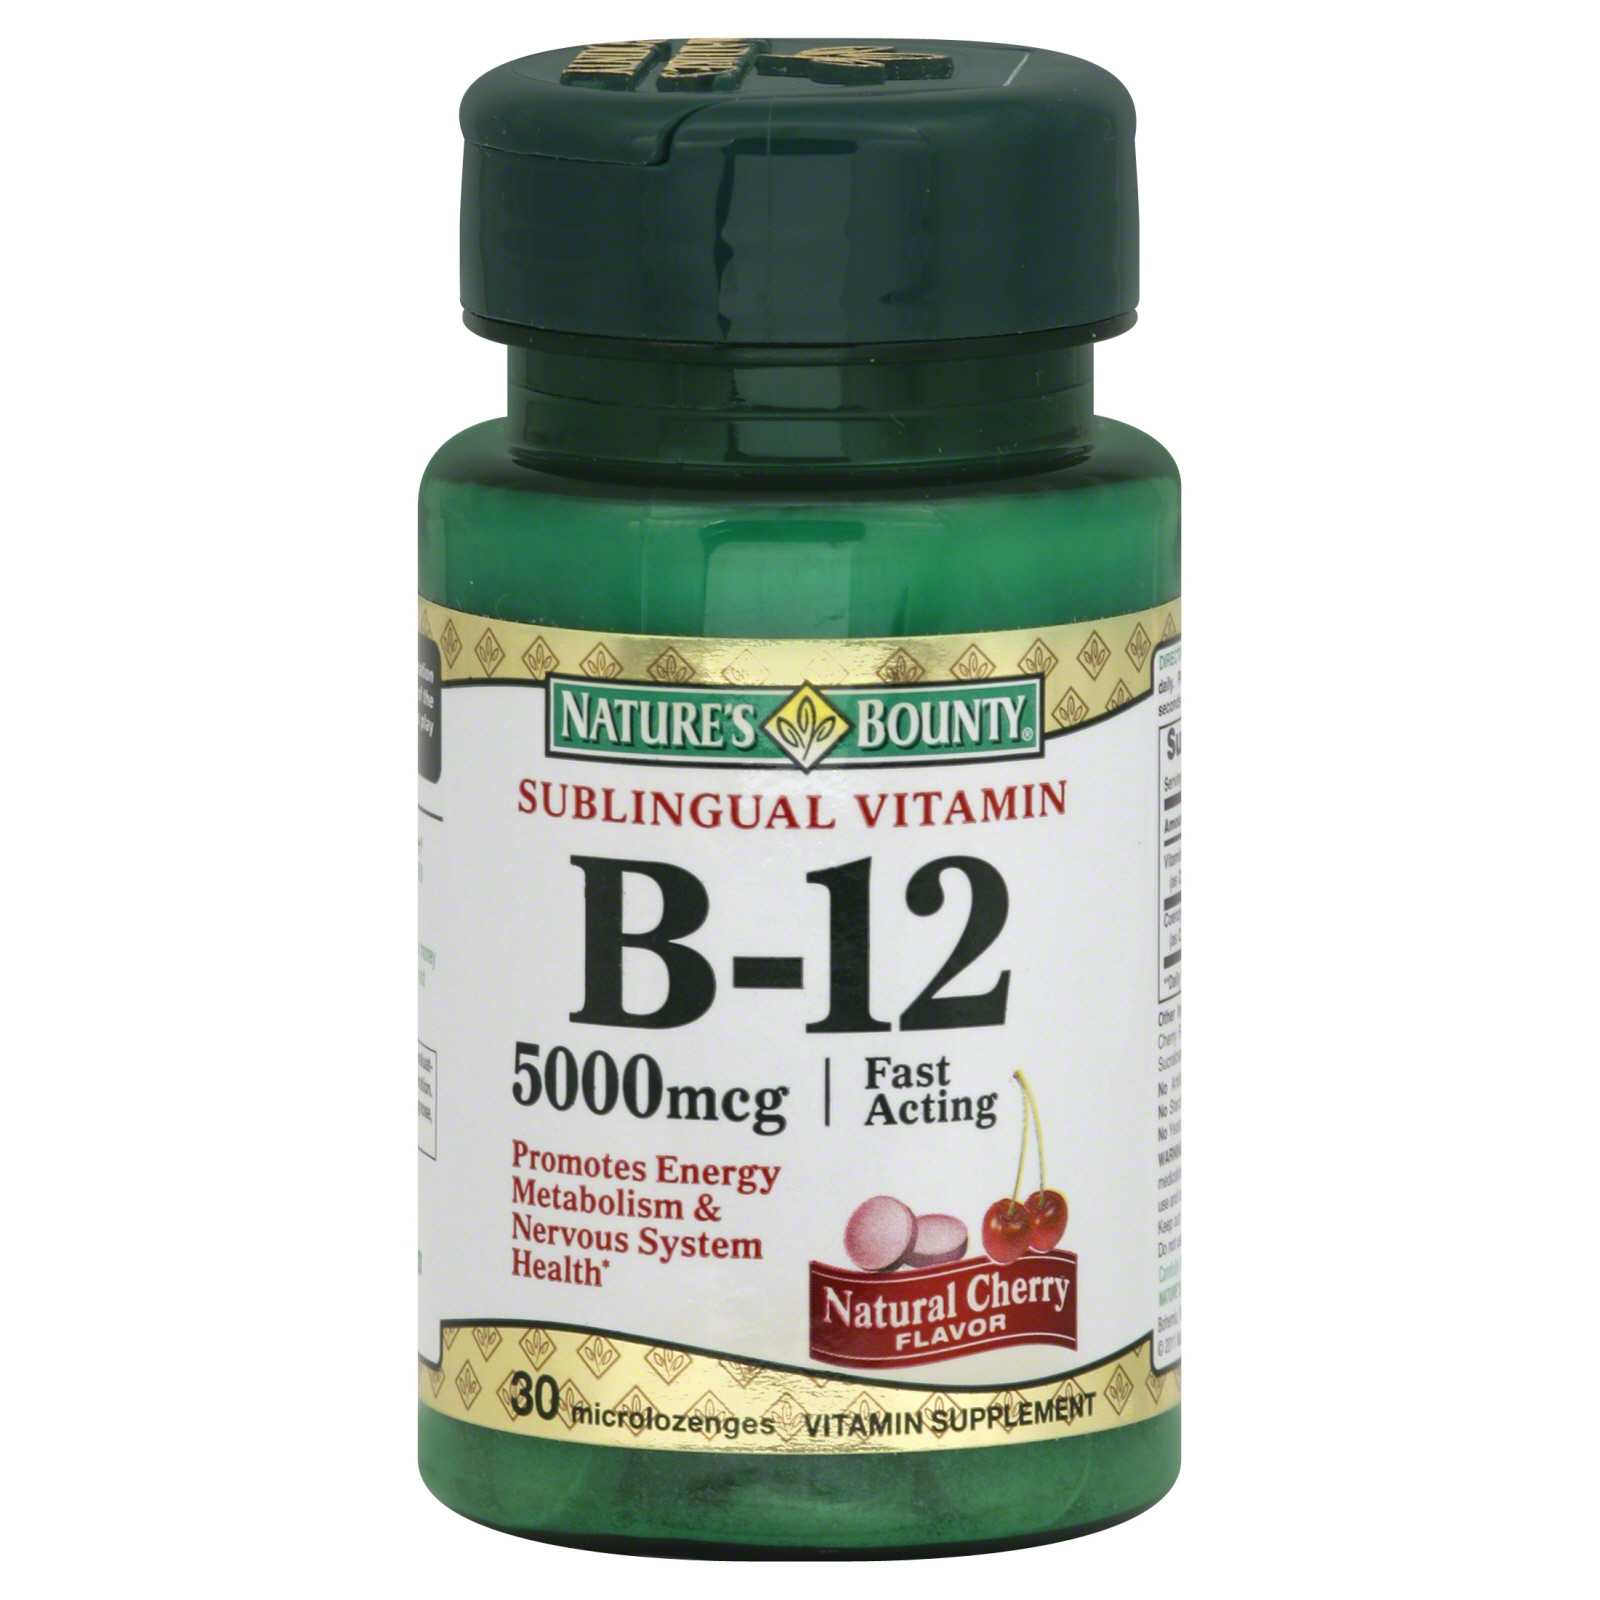 Nature's Bounty Vitamin B-12, Sublingual, 5000 mcg, Microlozenge, Natural Cherry Flavor, 30 microlozenges